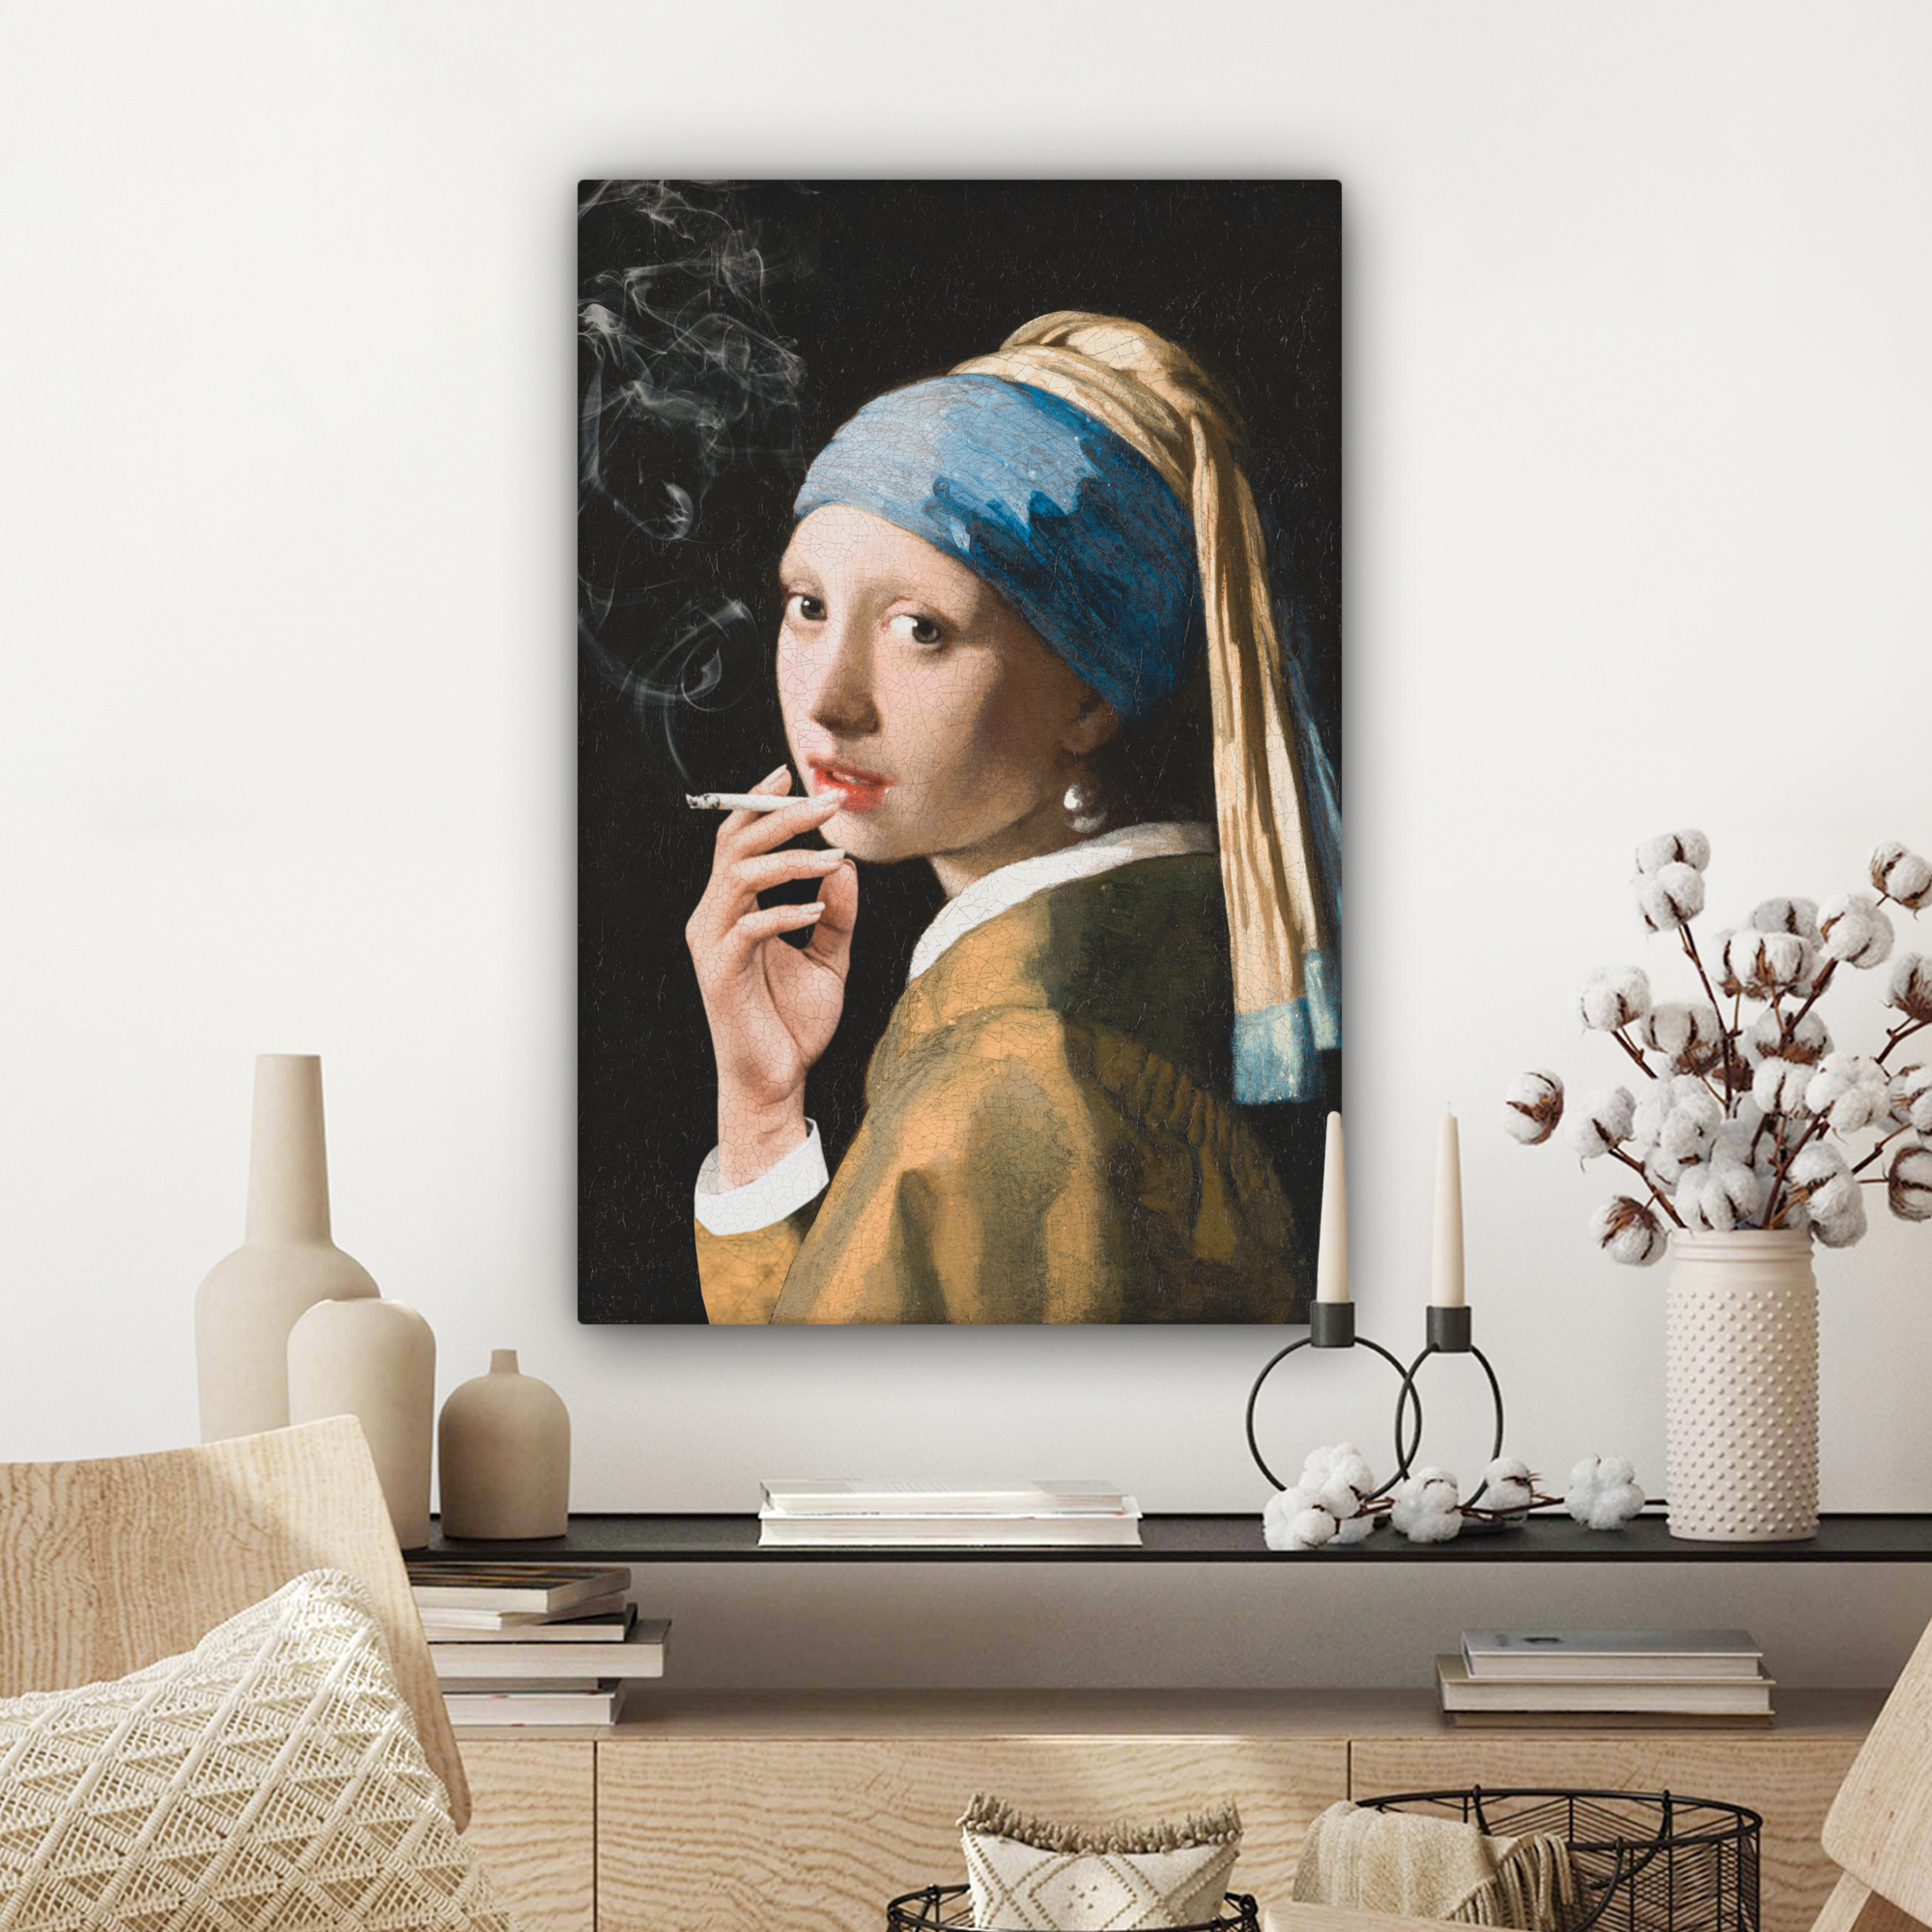 Leinwandbild - Mädchen mit Perlenohrring - Johannes Vermeer - Zigaretten-3